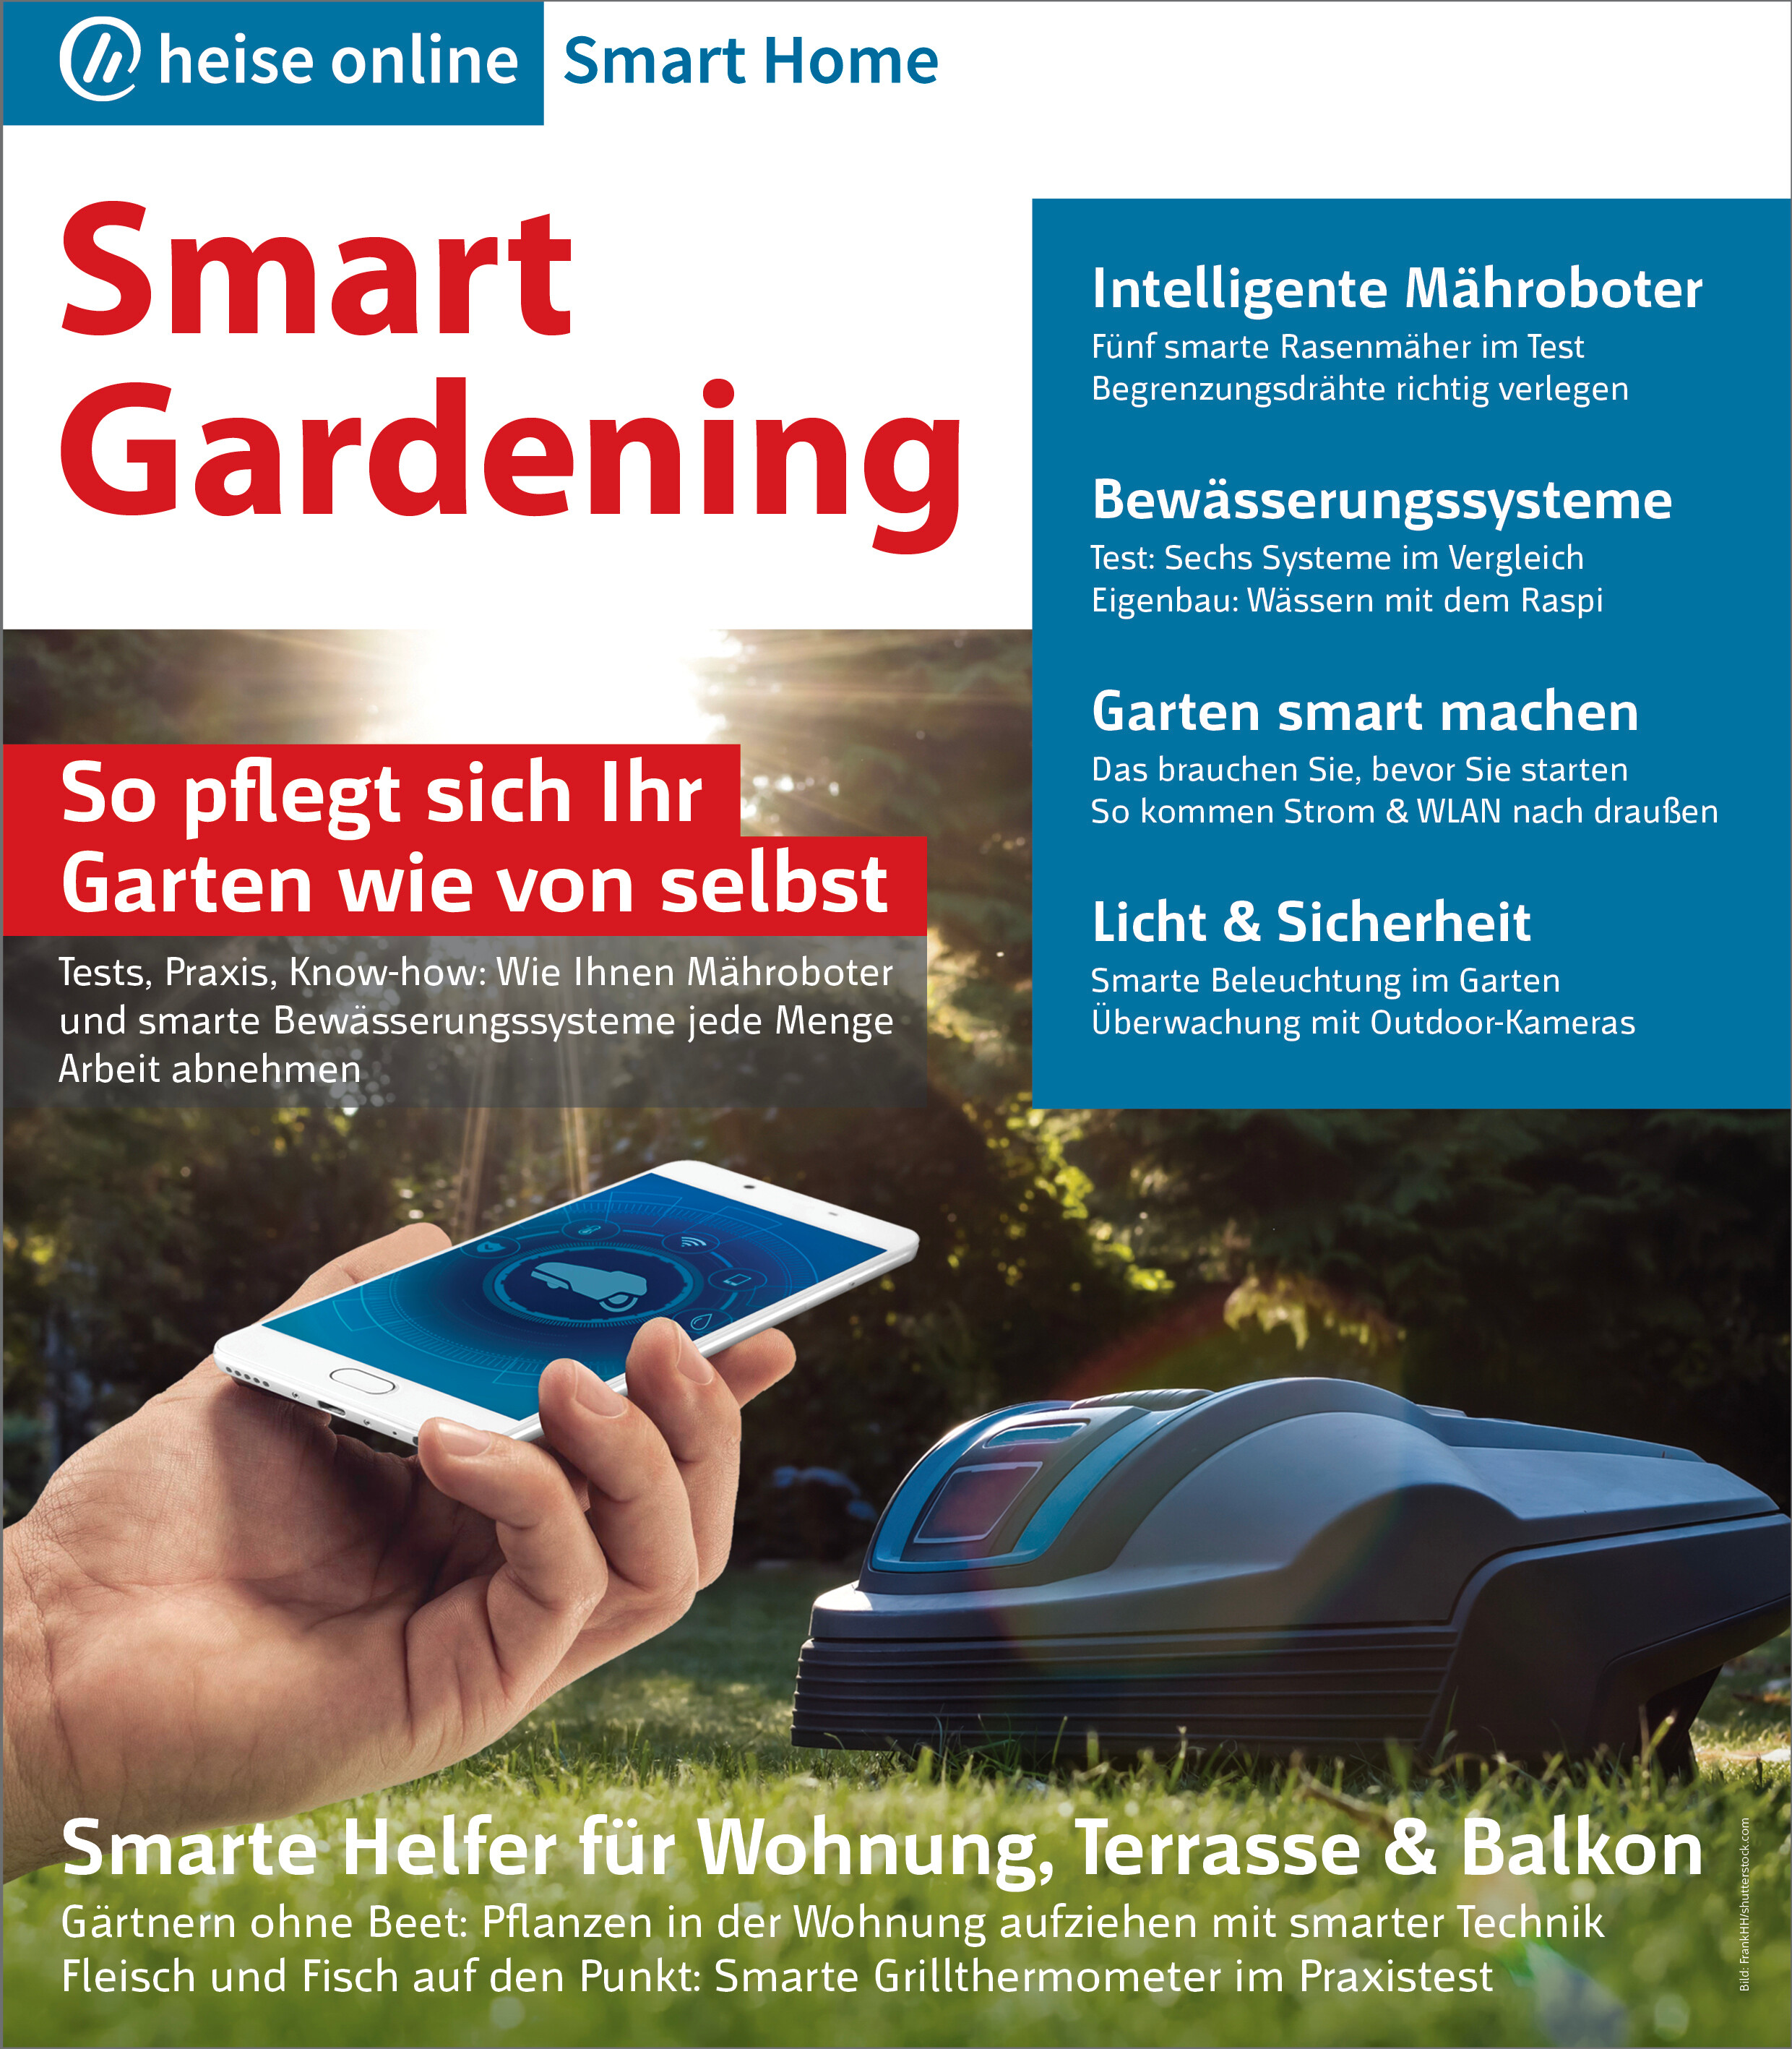 heise online Smart Home - Smart Gardening